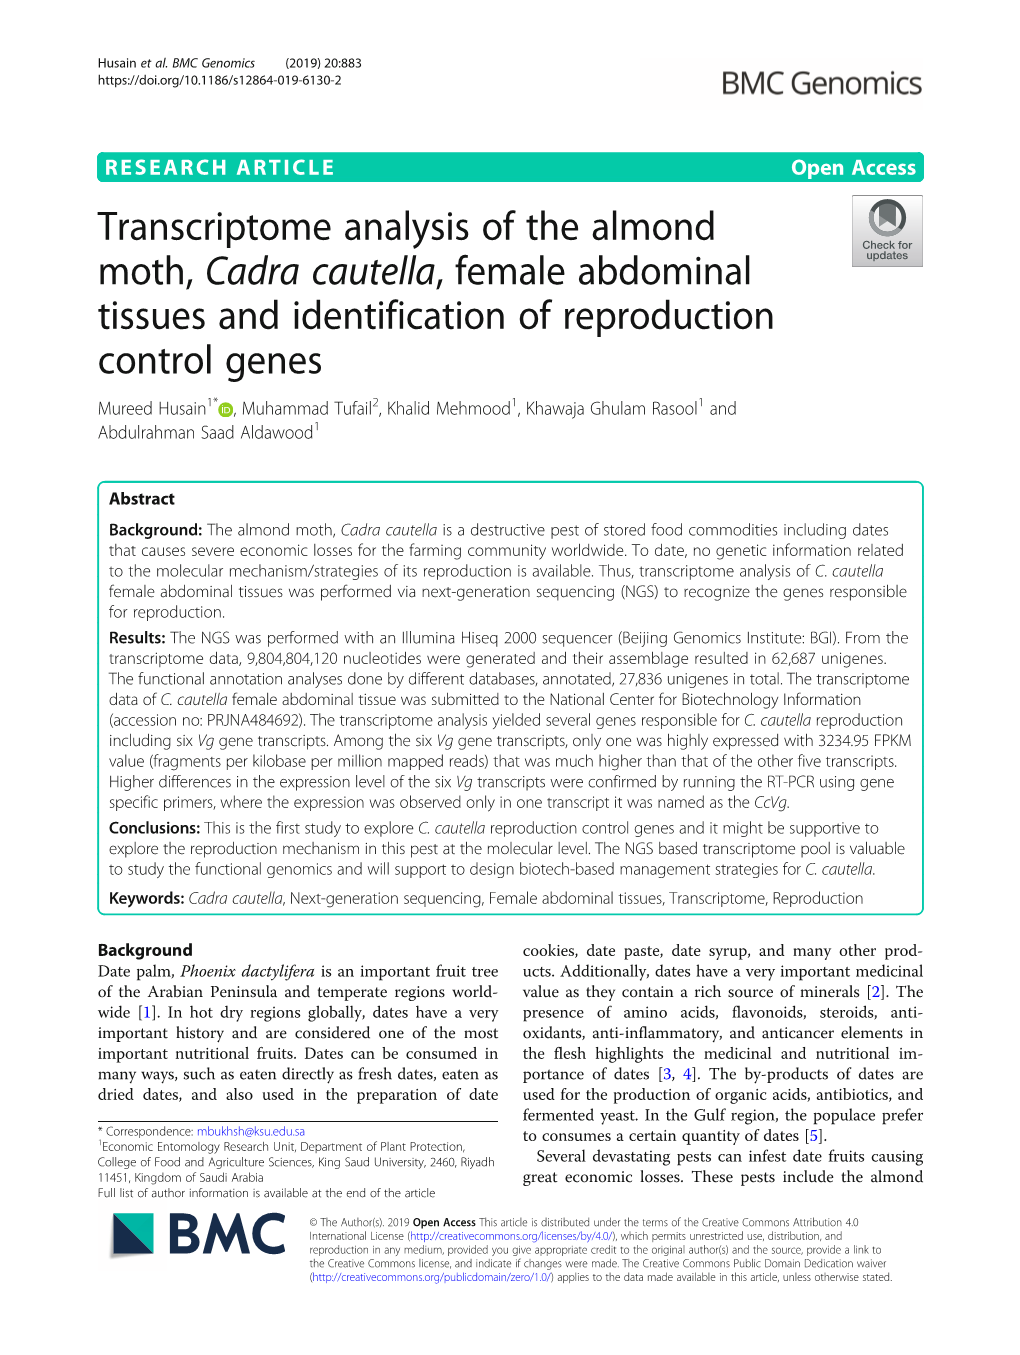 Transcriptome Analysis of the Almond Moth, Cadra